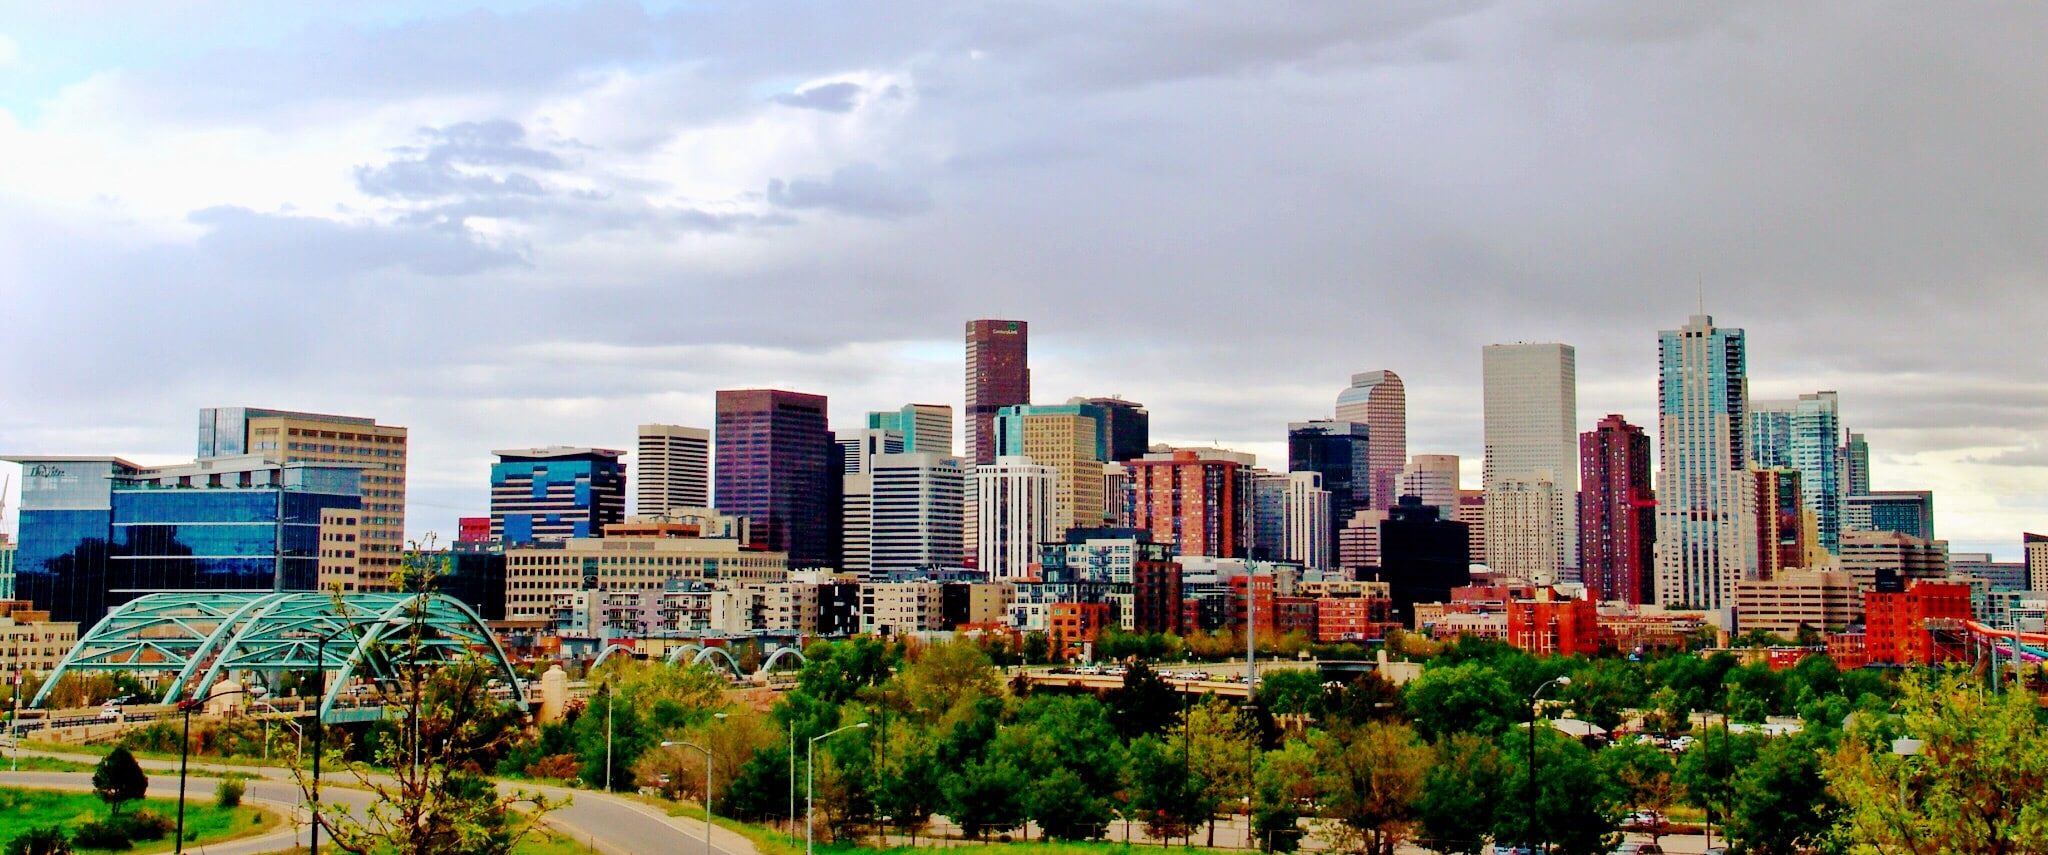 Denver Housing Market Update – March 2021